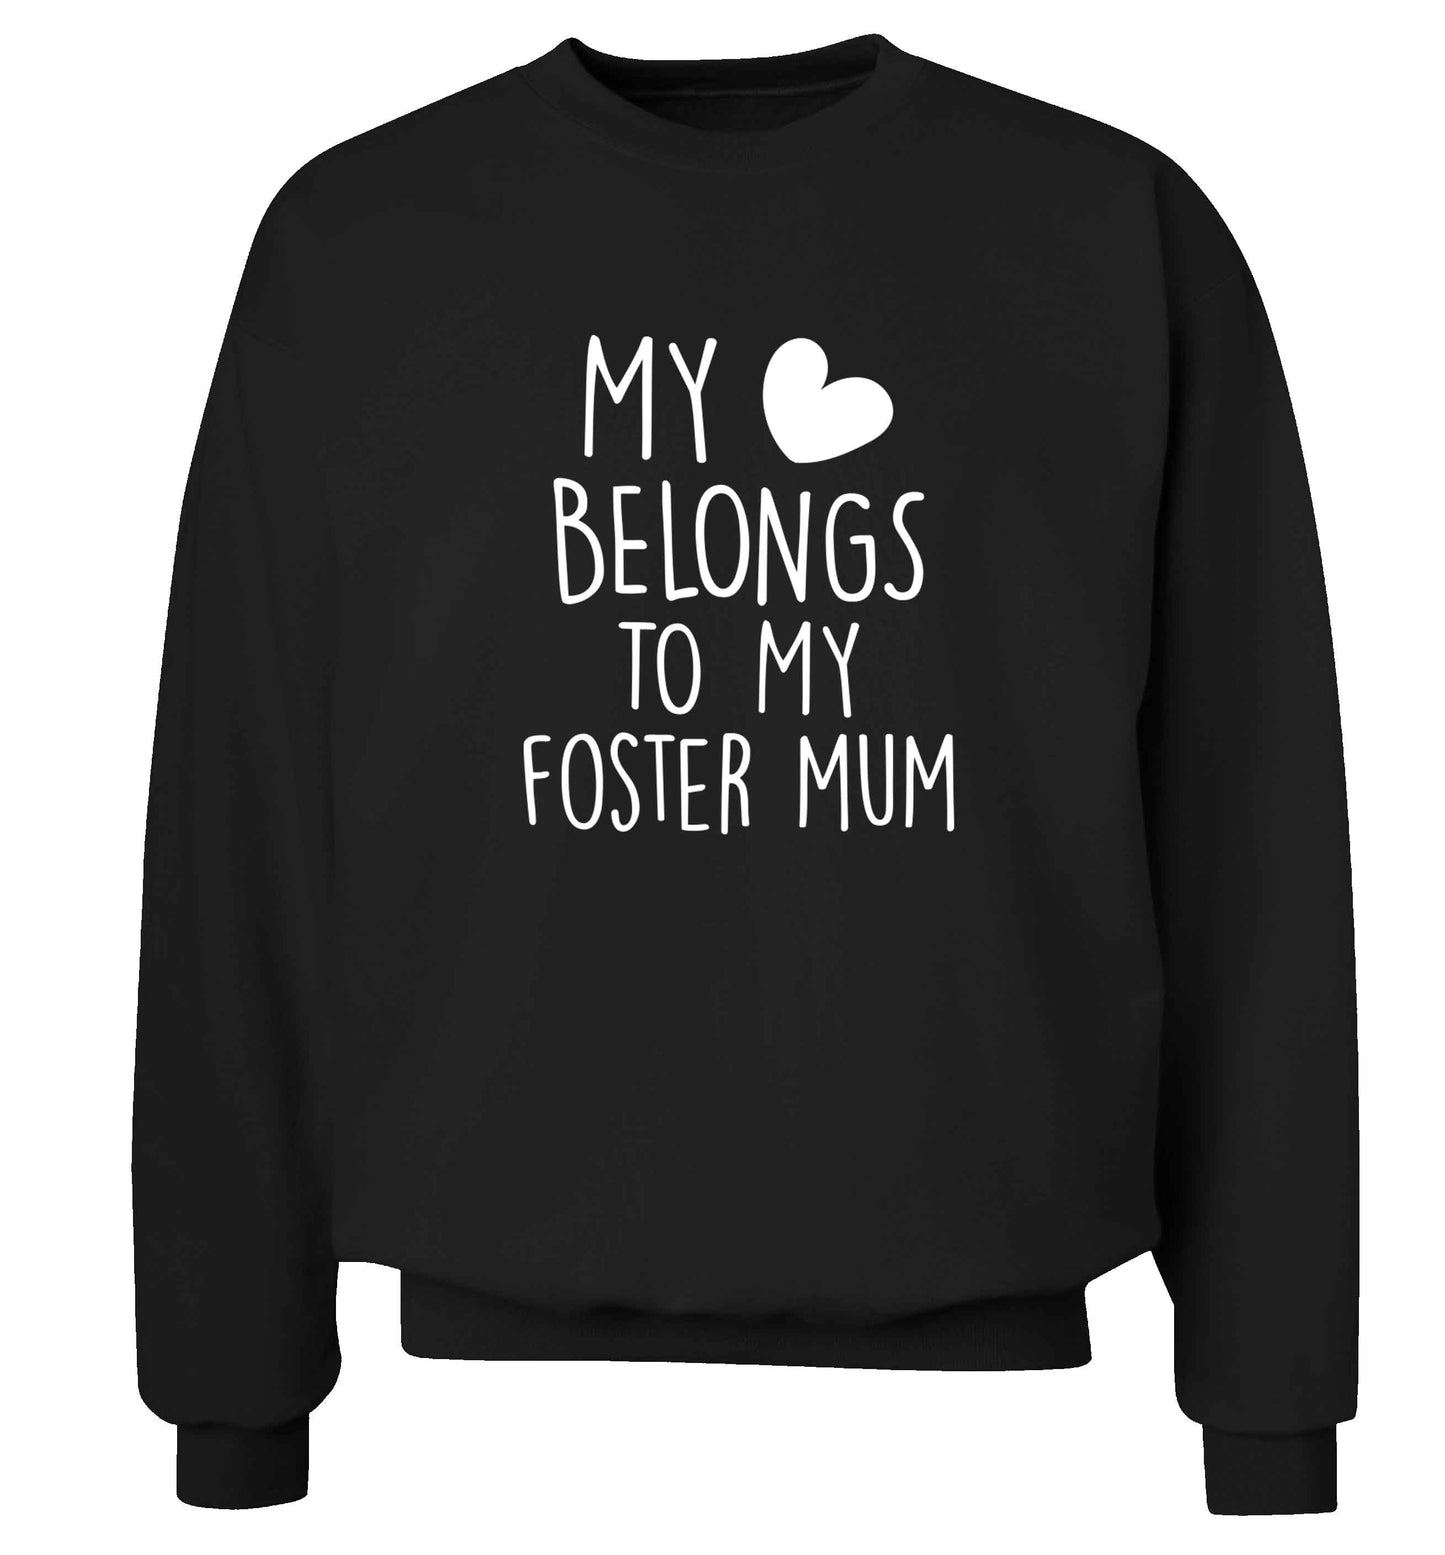 My heart belongs to my foster mum adult's unisex black sweater 2XL